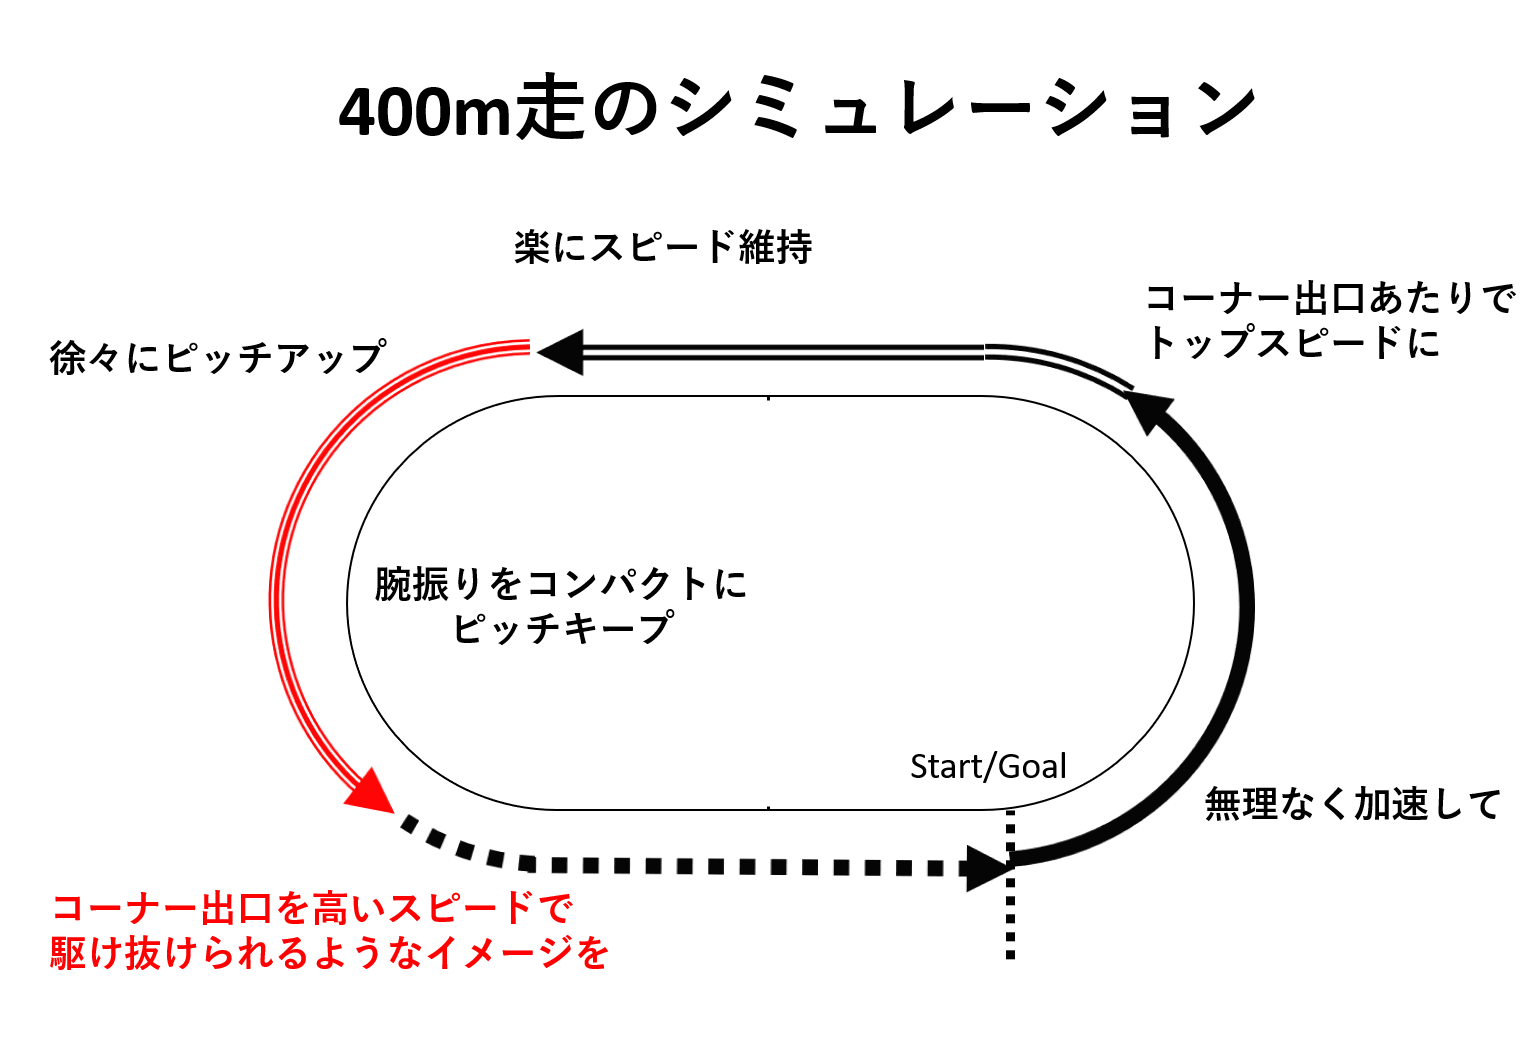 400m走の中盤の技術 0 300mを上手く走る方法 陸上競技の理論と実践 Sprint Conditioning